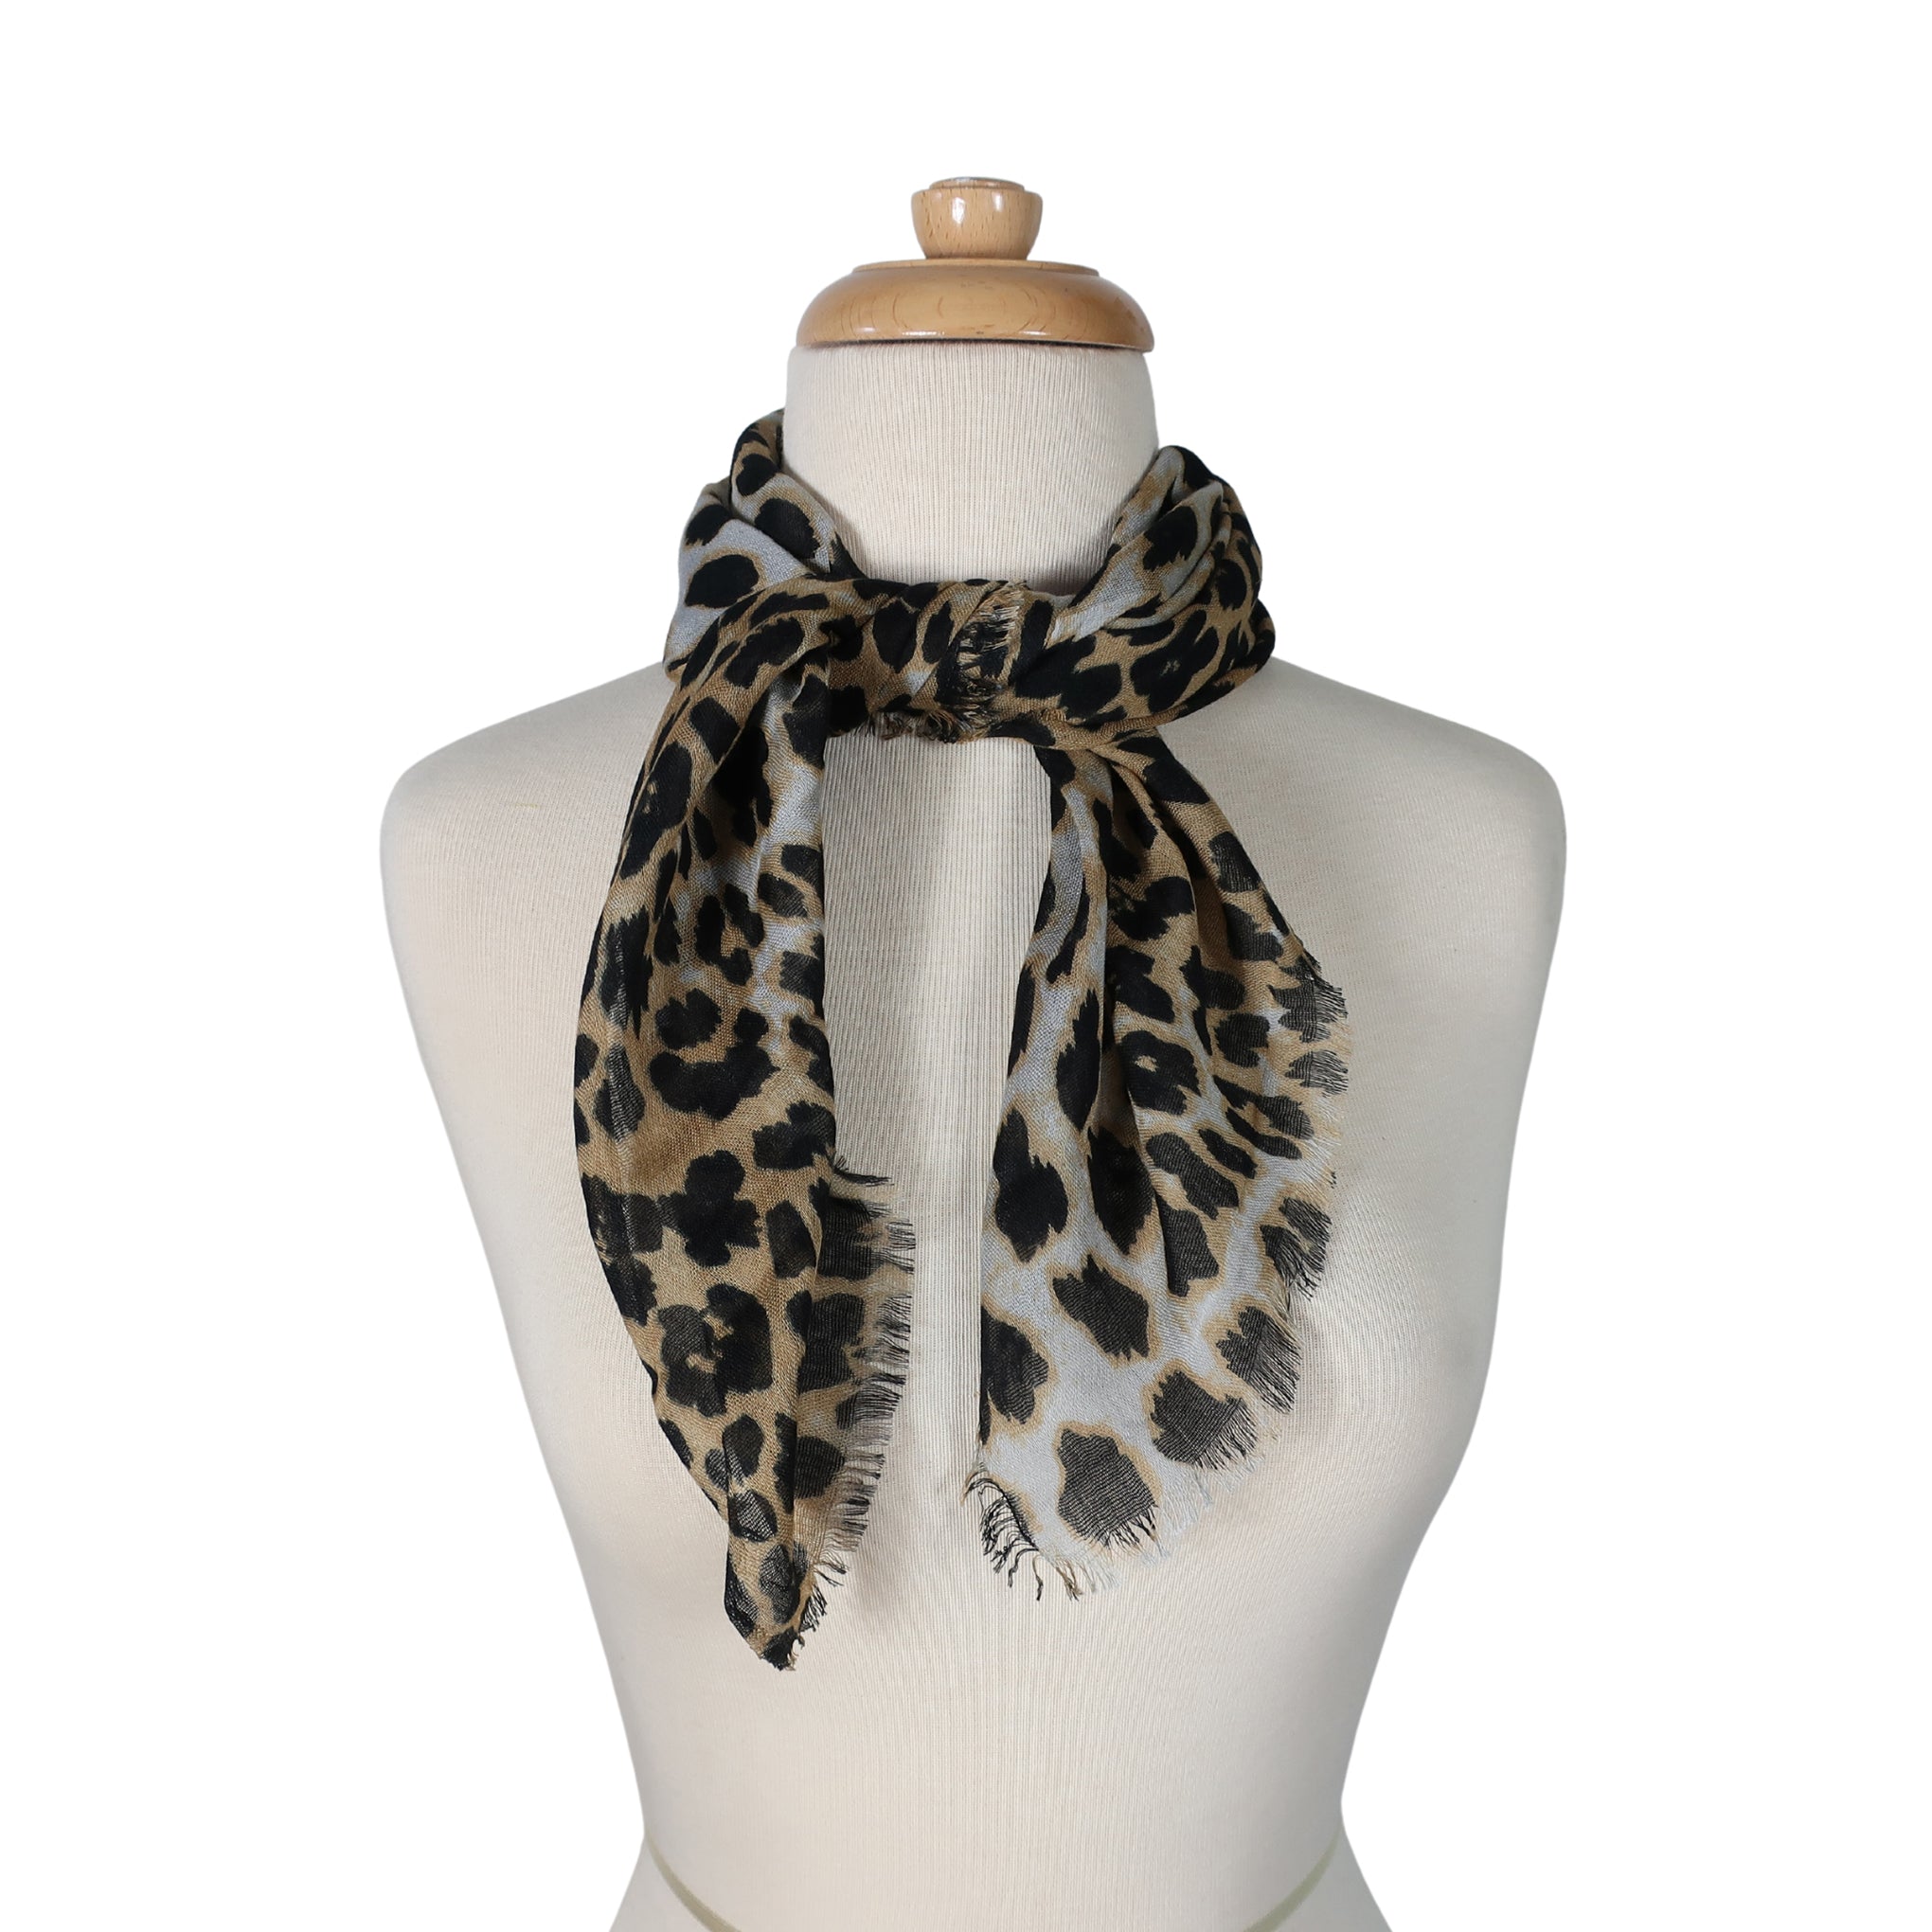 Blue Pacific Animal Print Cashmere and Silk Scarf Neckerchief in Tan Leopard